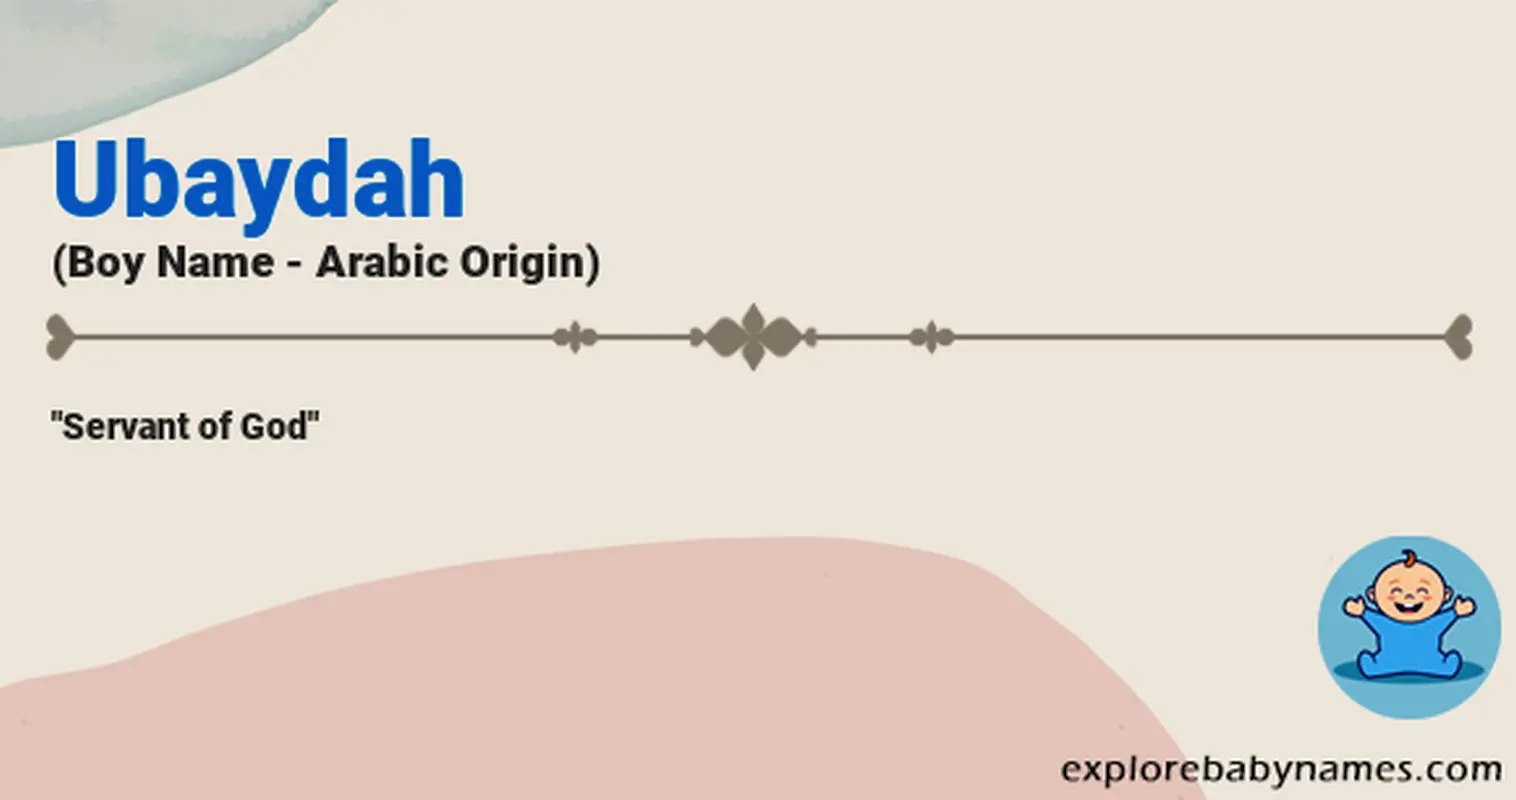 Meaning of Ubaydah